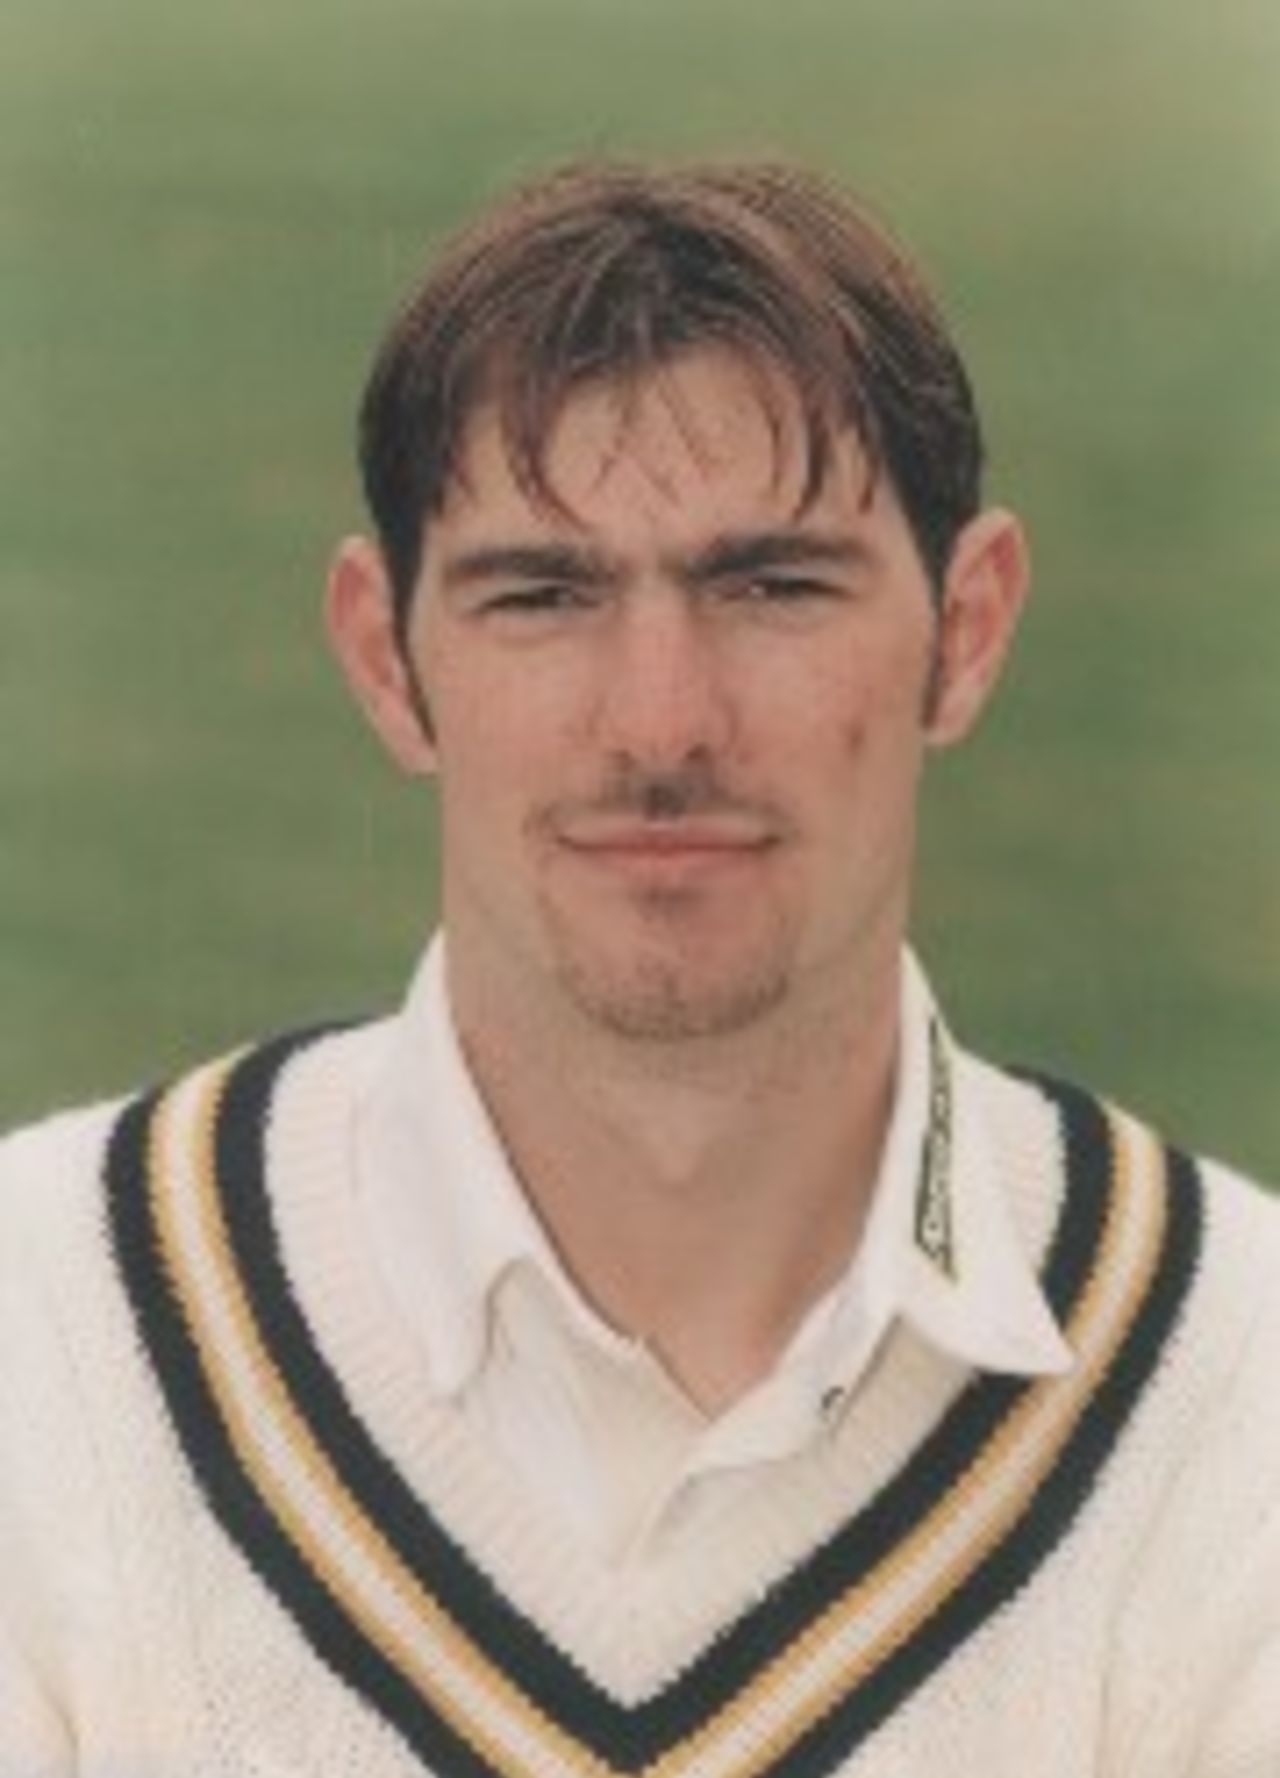 Lee Savident (Hampshire bowler)